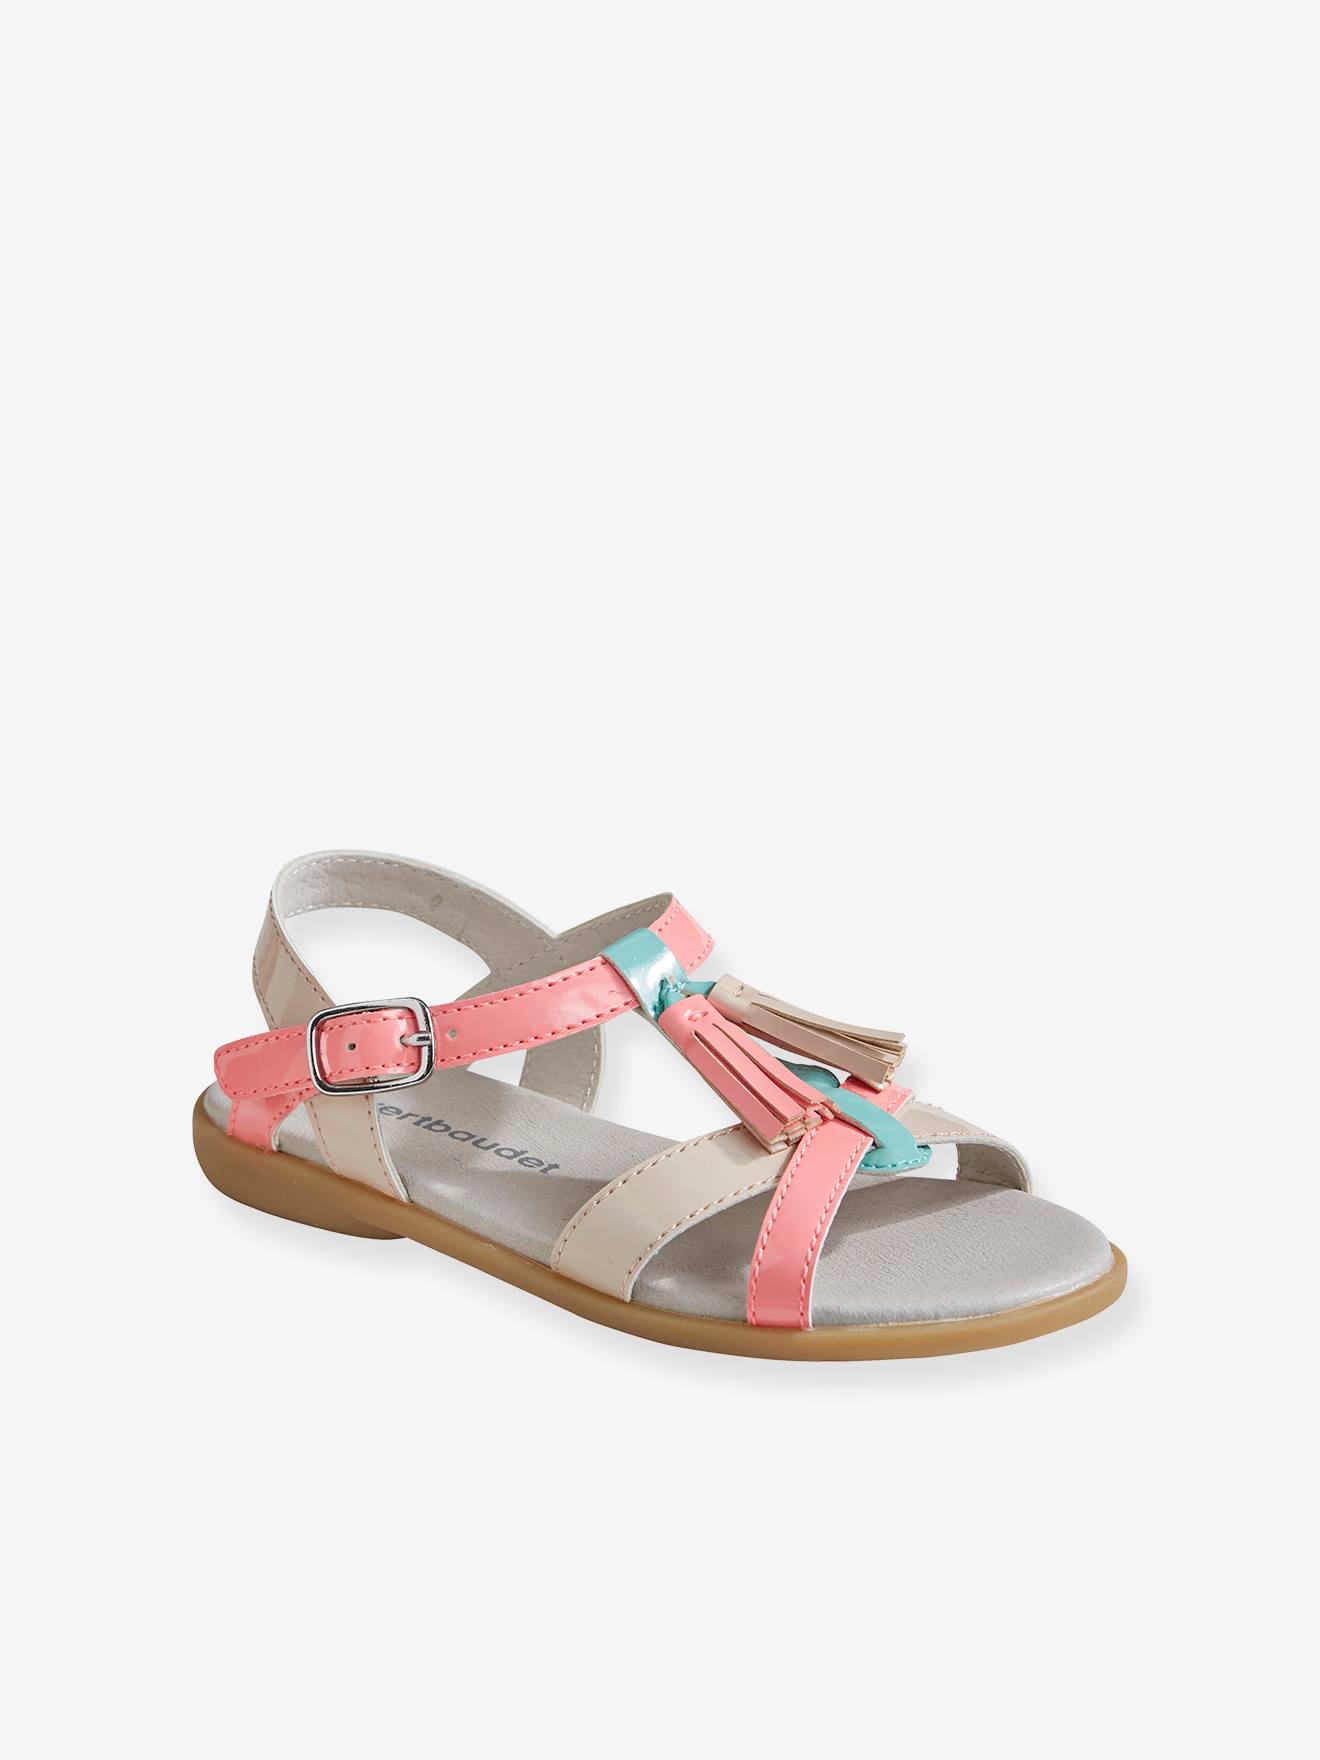 sandals for girls stylish